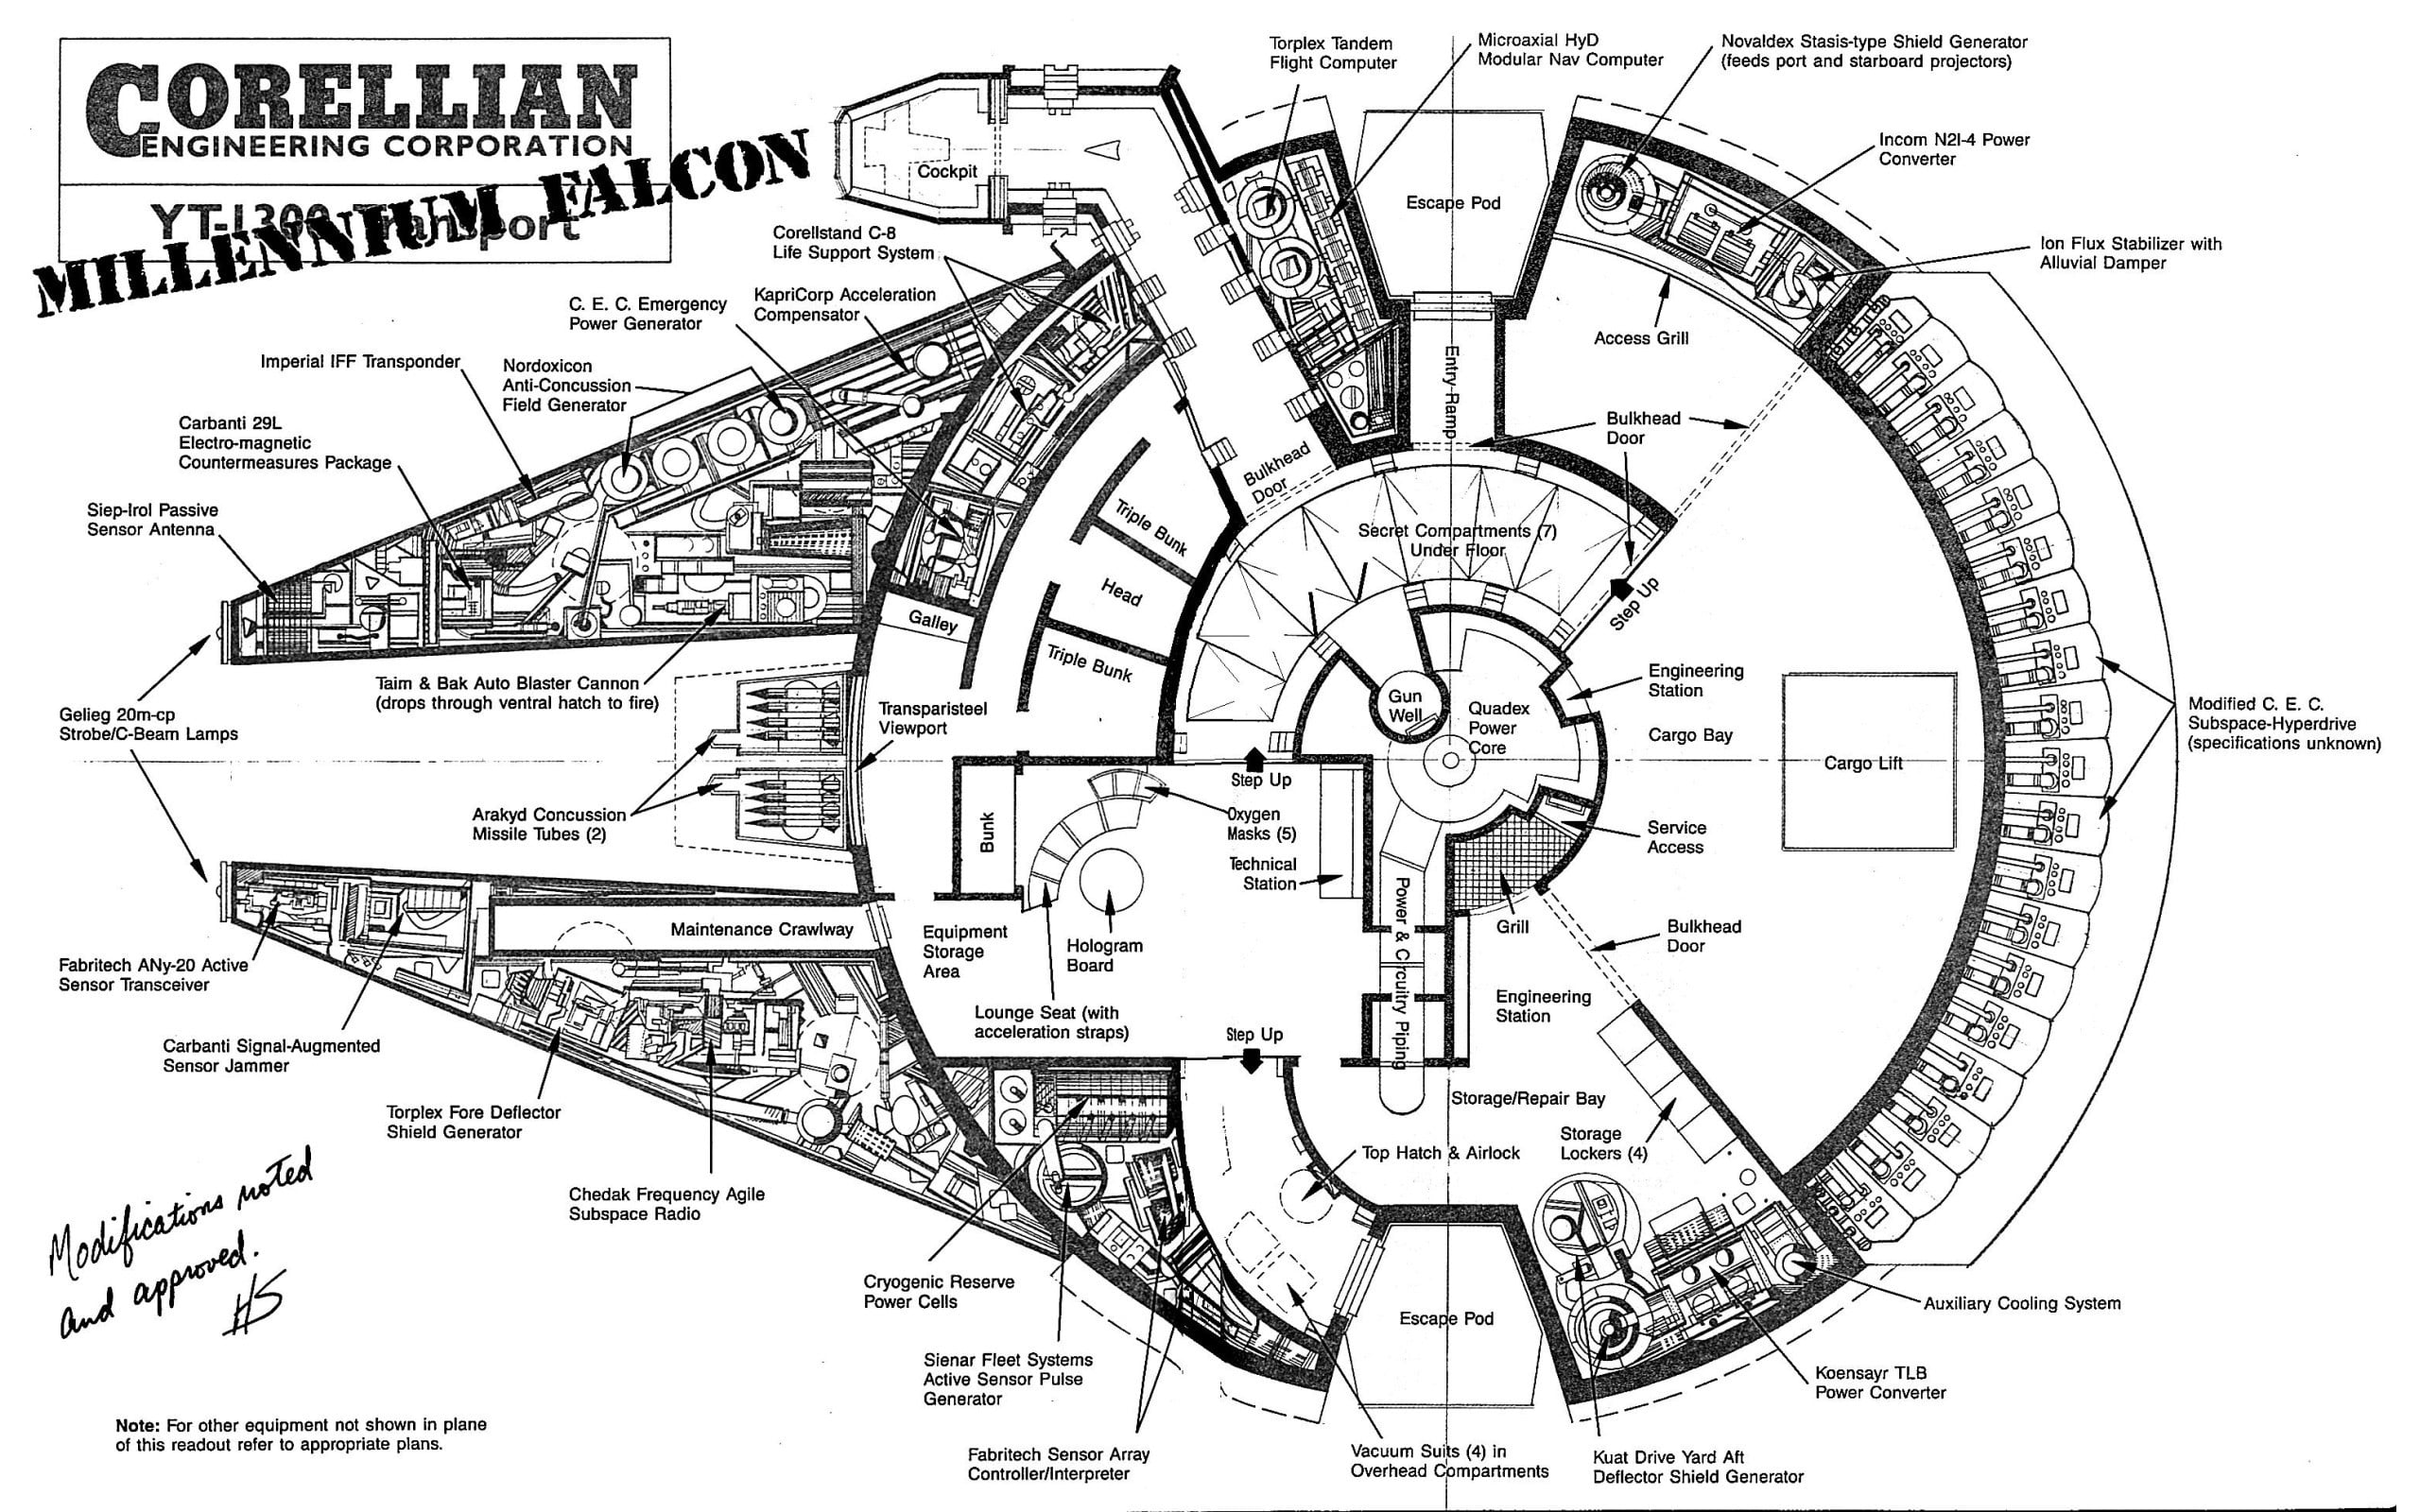 Star Wars Millennium Falcon illustration, Star Wars, Millennium Falcon, blueprints, monochrome